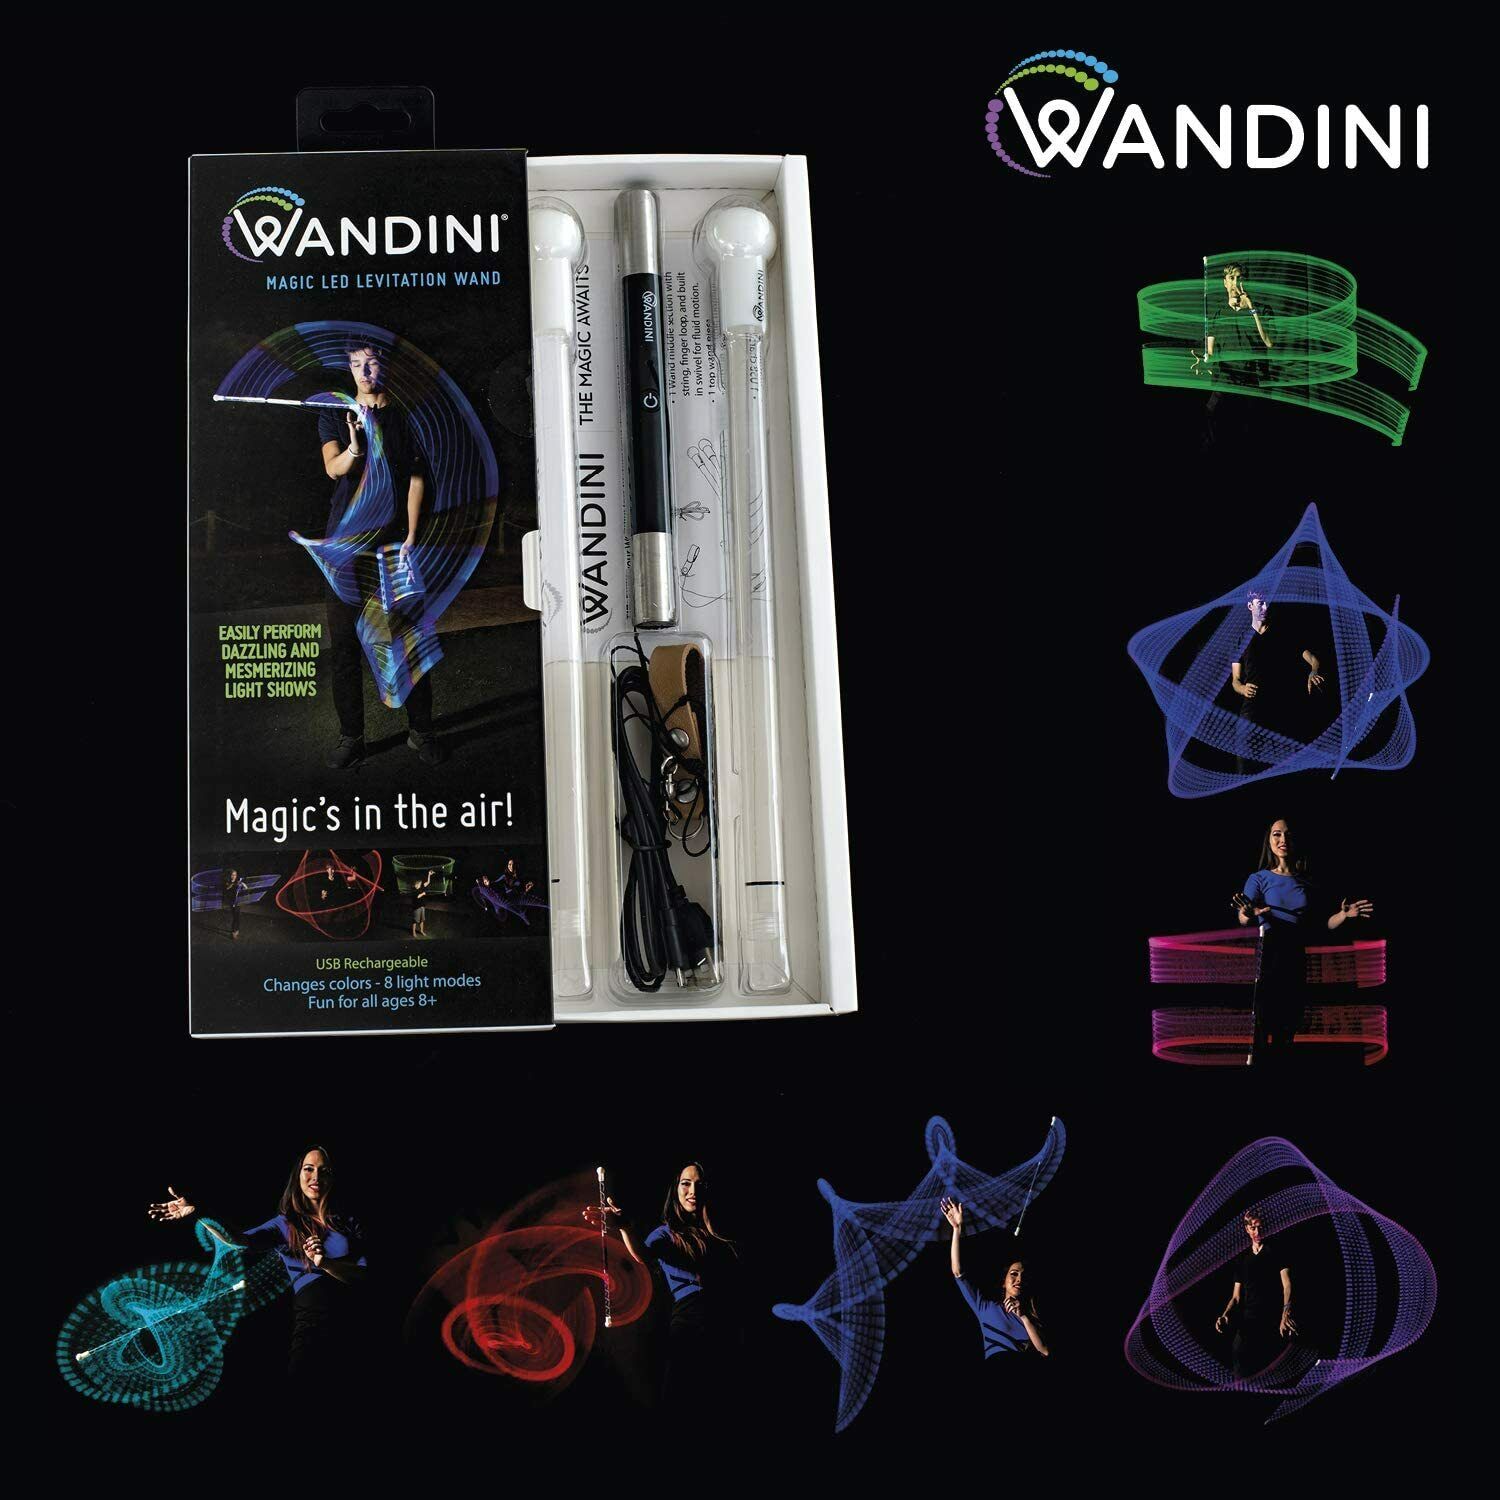 Wandini Magic LED Levitation Wand Amazing Lights Flow Levi Wand - USB Recharge